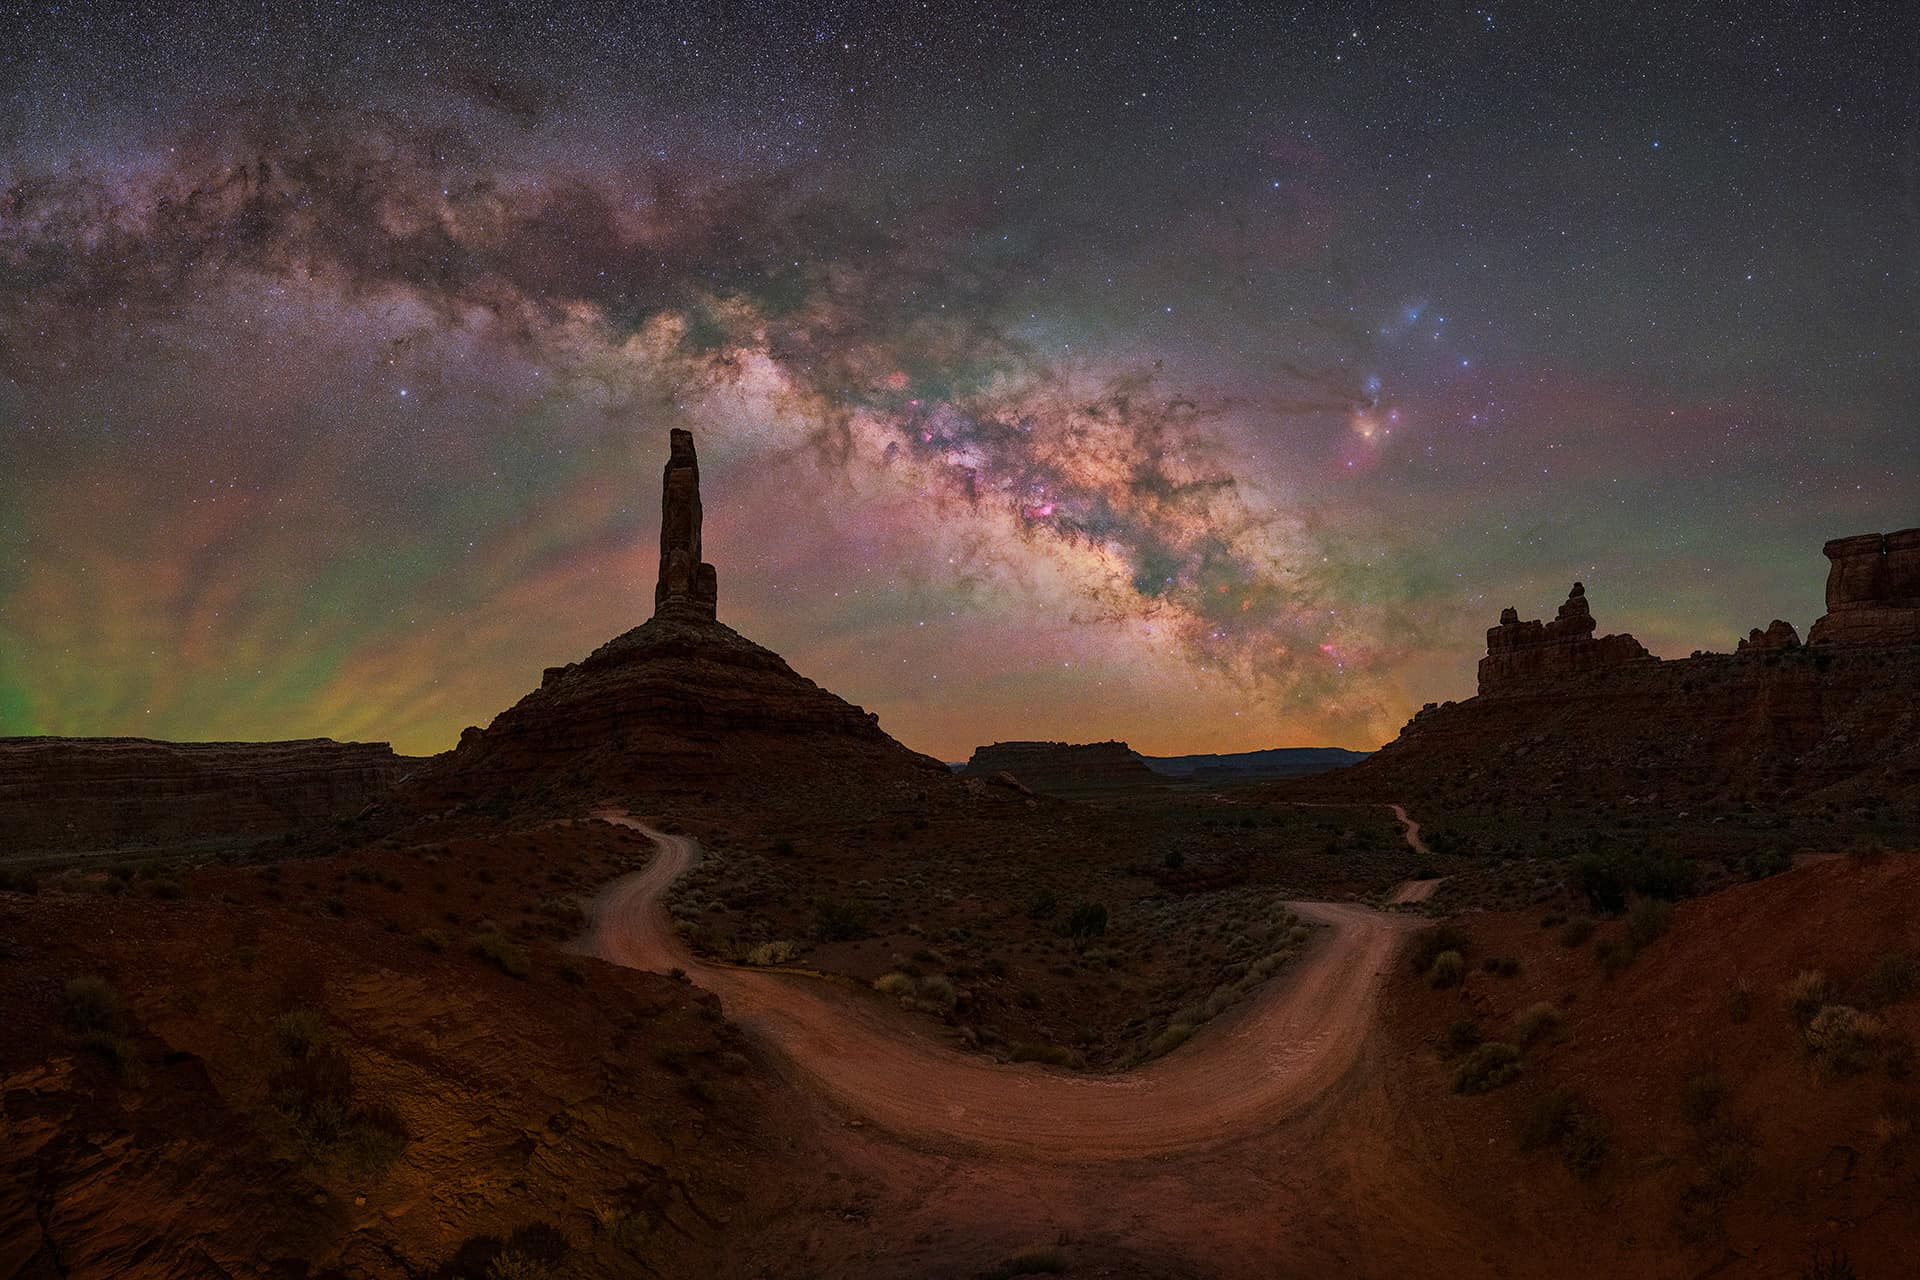 Milky Way photographer of the year Utah USA